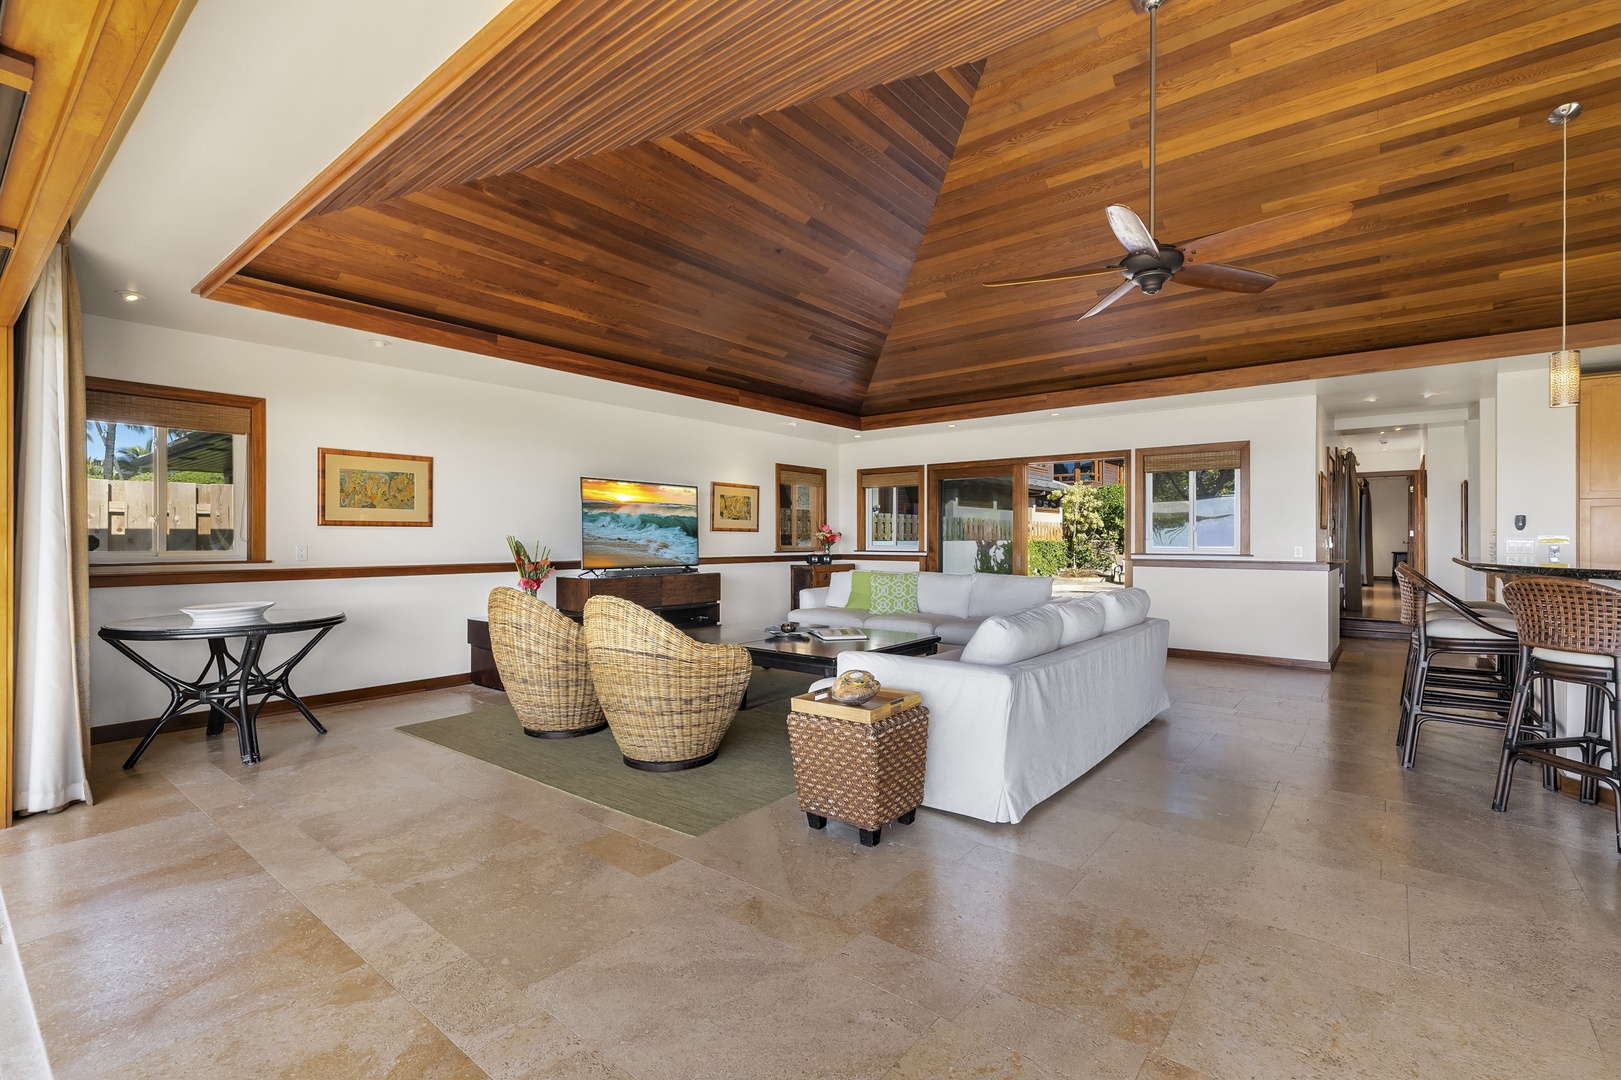 Honolulu Vacation Rentals, Hale Makai at Diamond Head - Living Room area opens to Private Pool